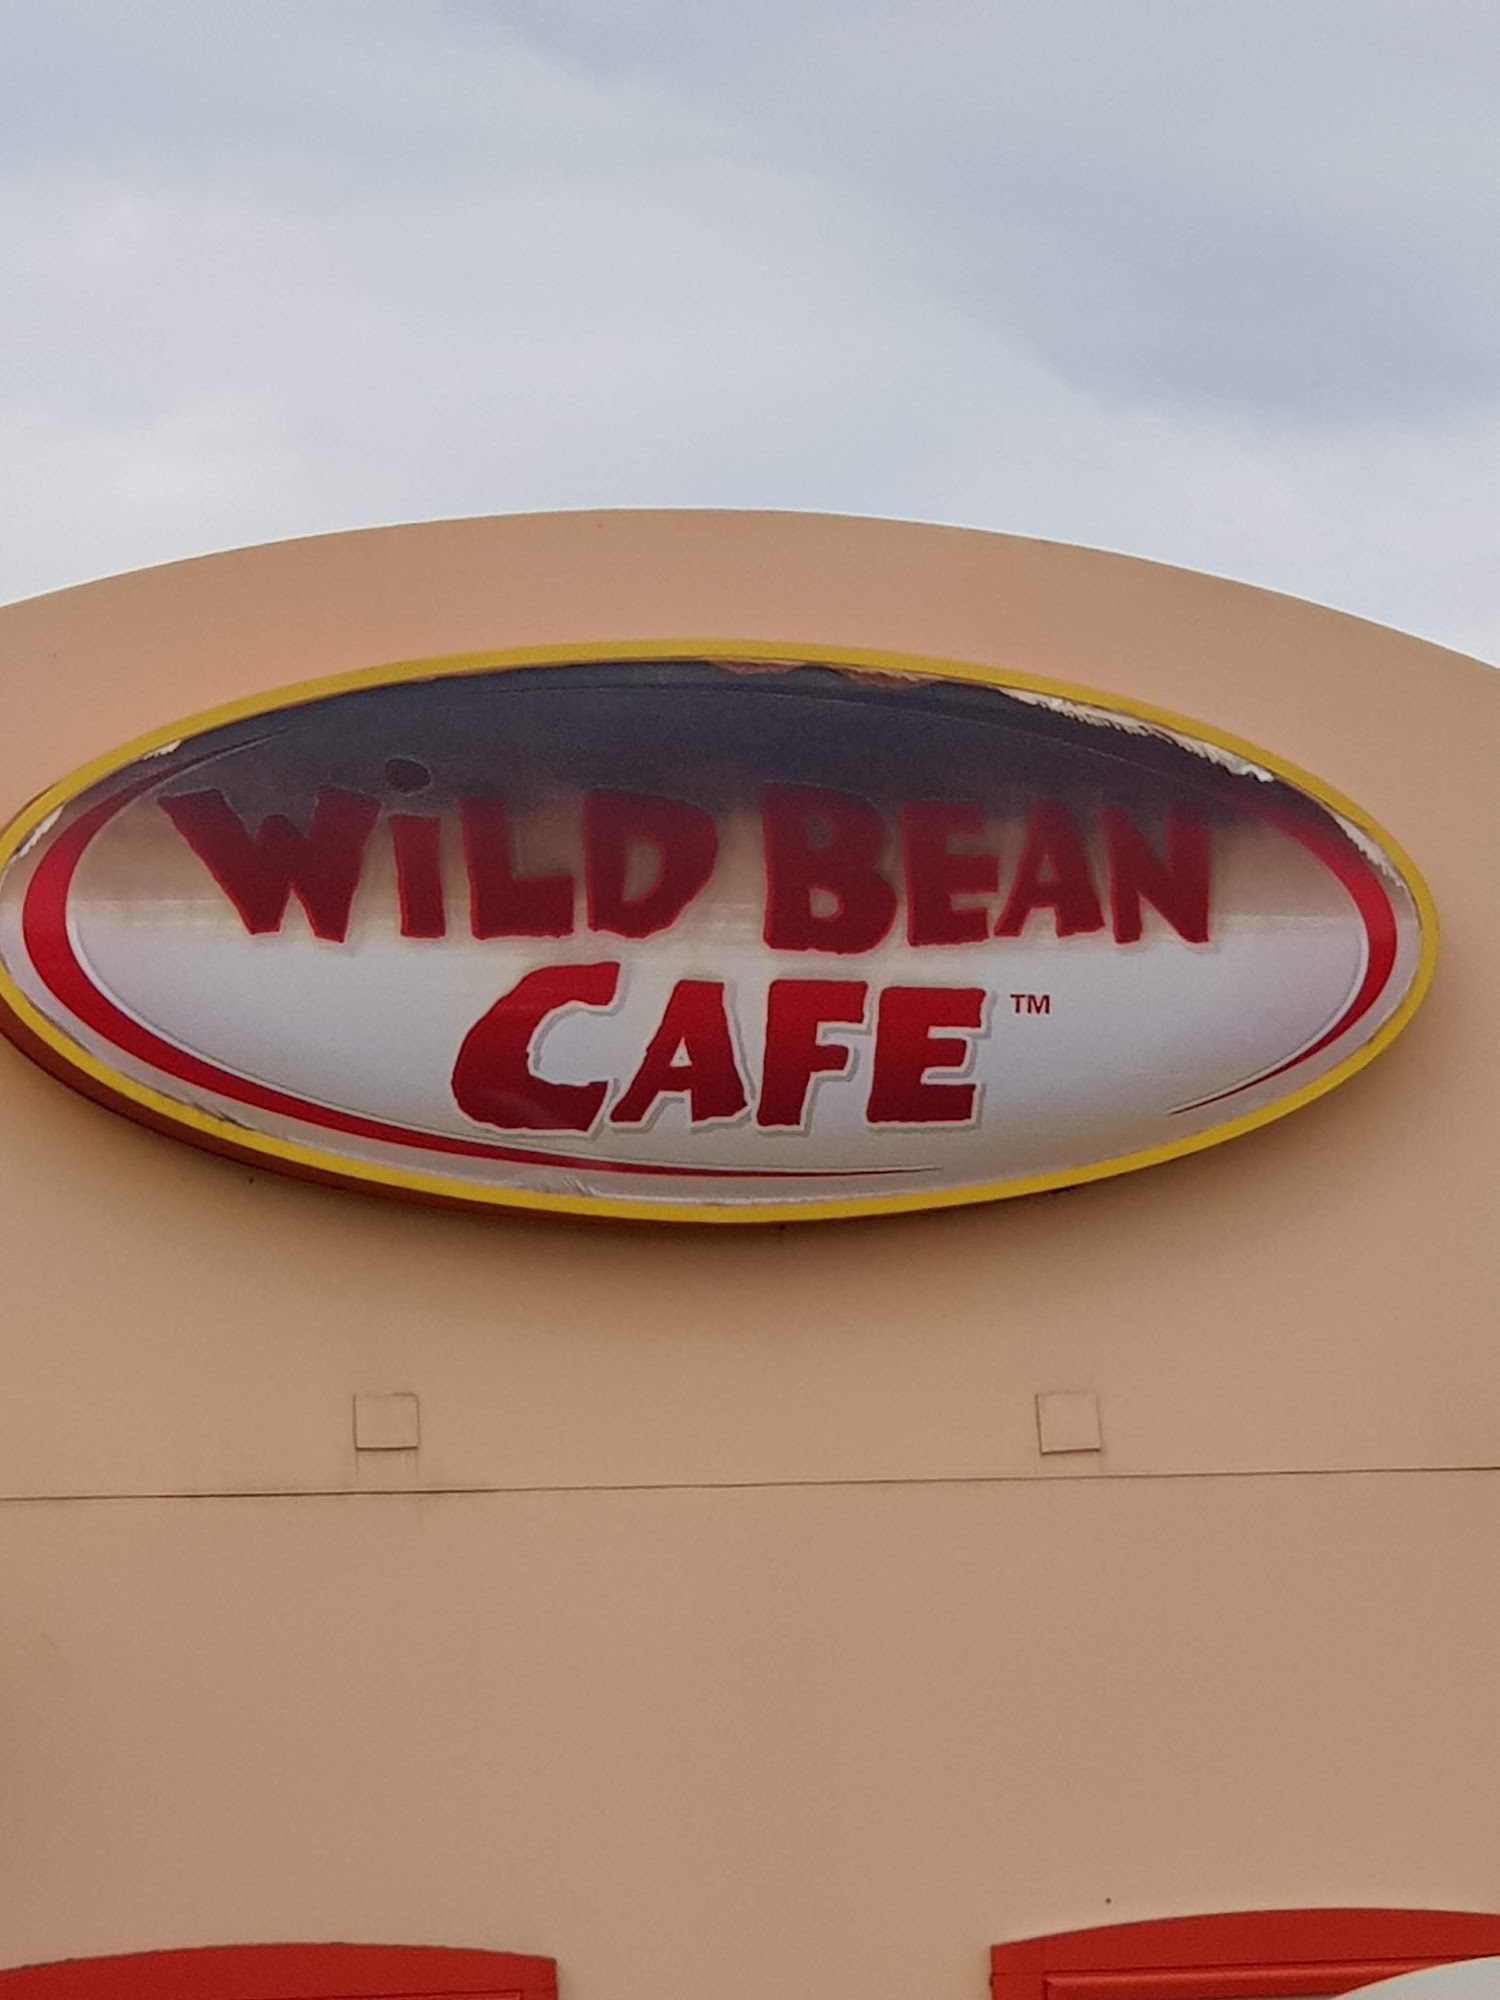 Wild Bean Cafe